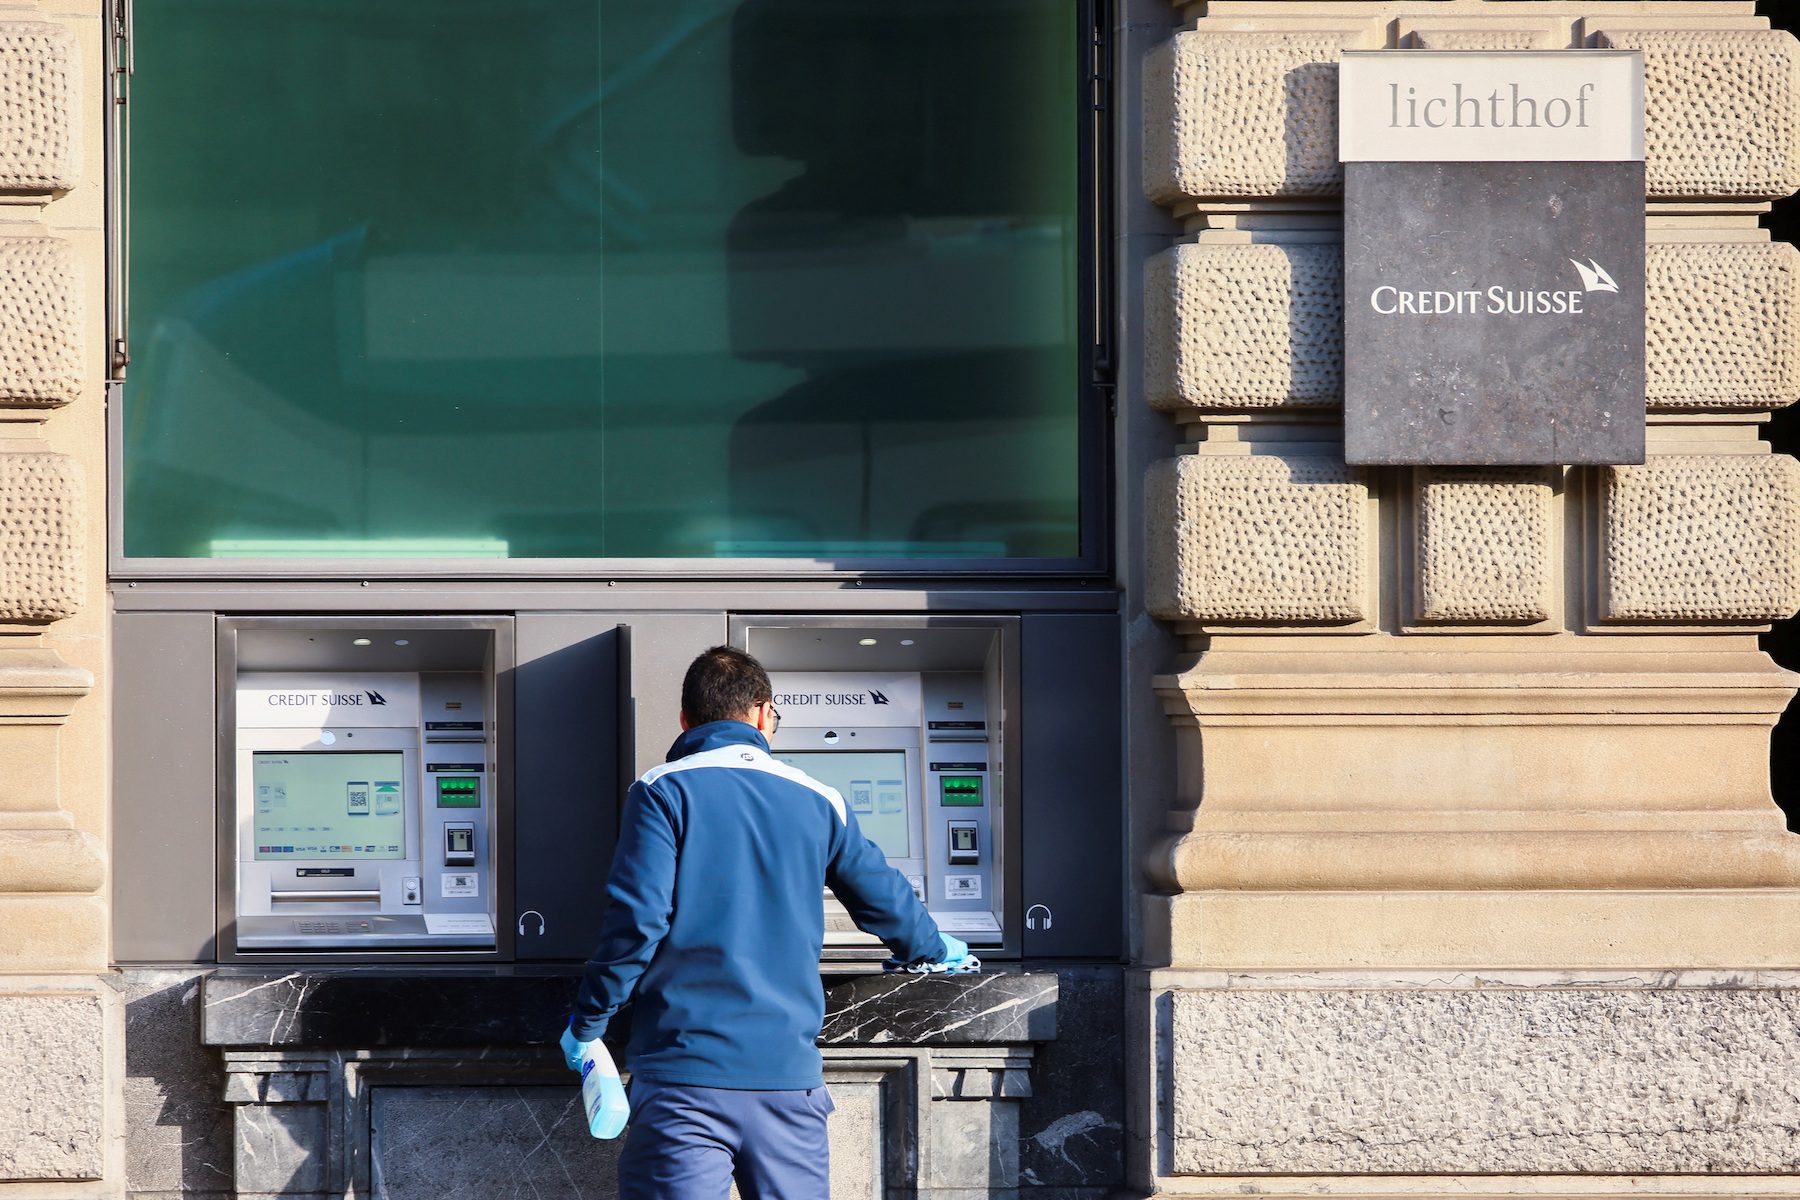 Switzerland curbs bonus payouts at Credit Suisse